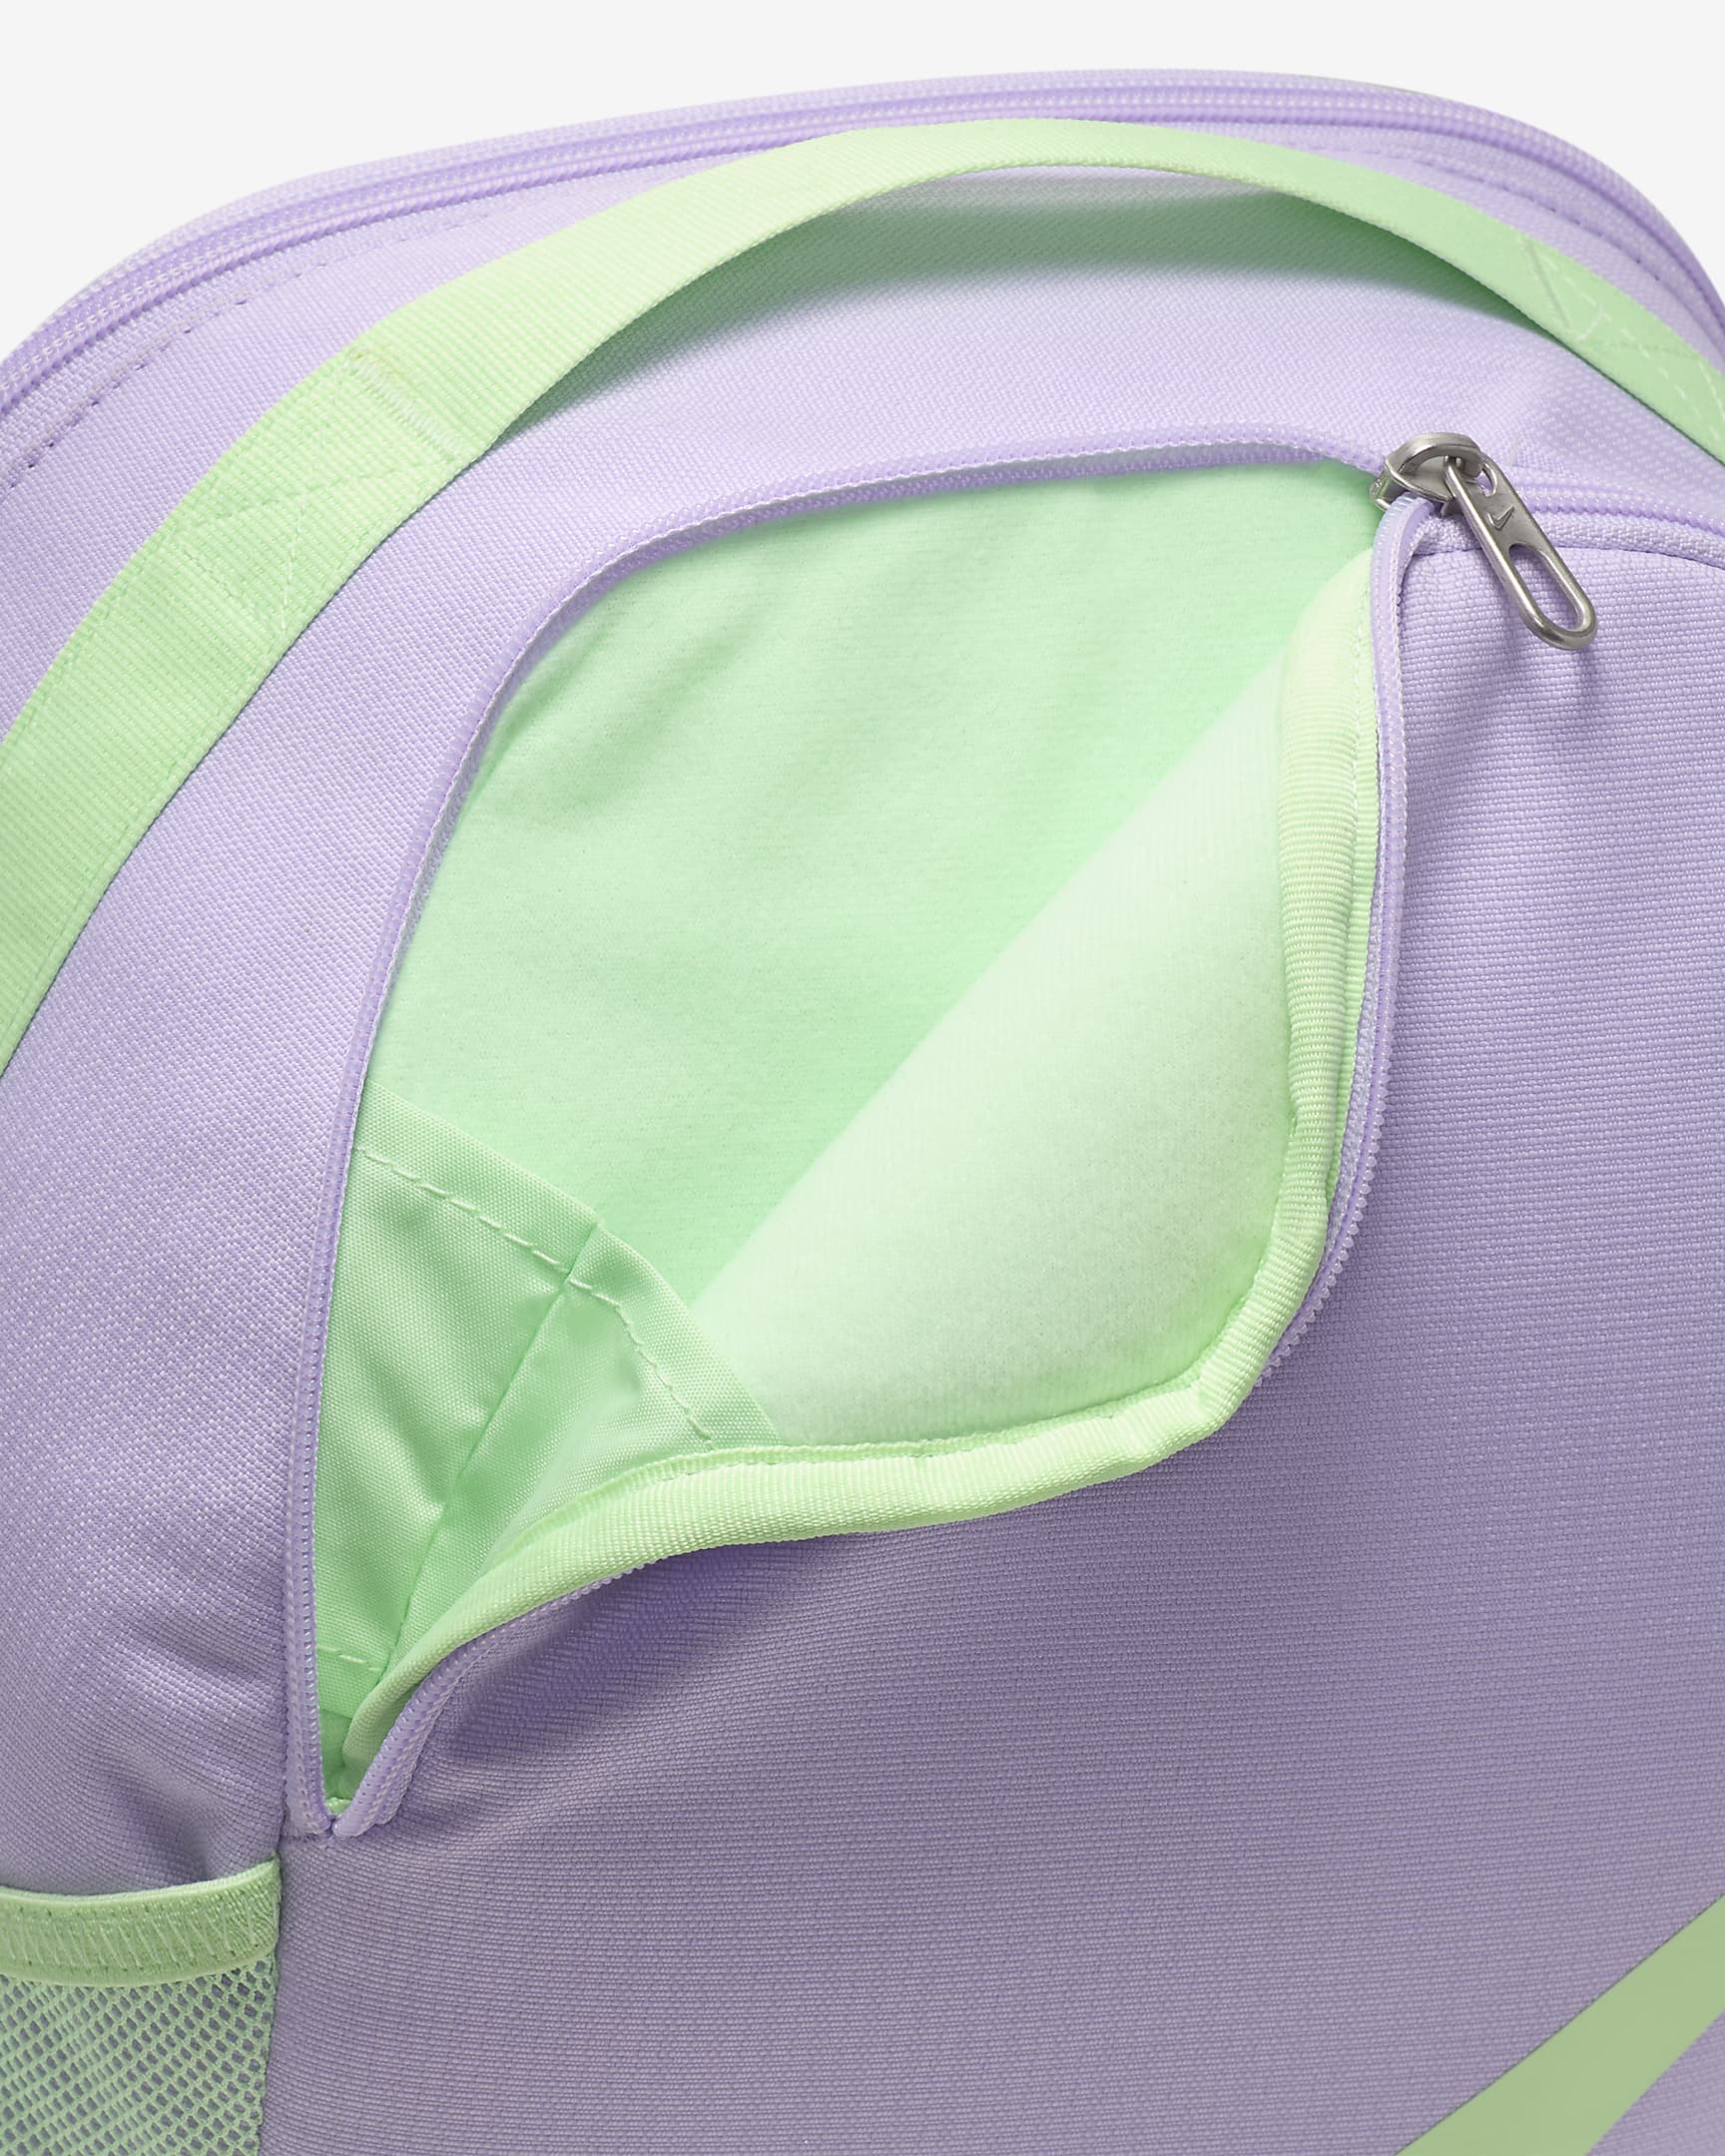 Nike Brasilia Kids' Backpack (18L) - Lilac Bloom/Vapor Green/Vapor Green